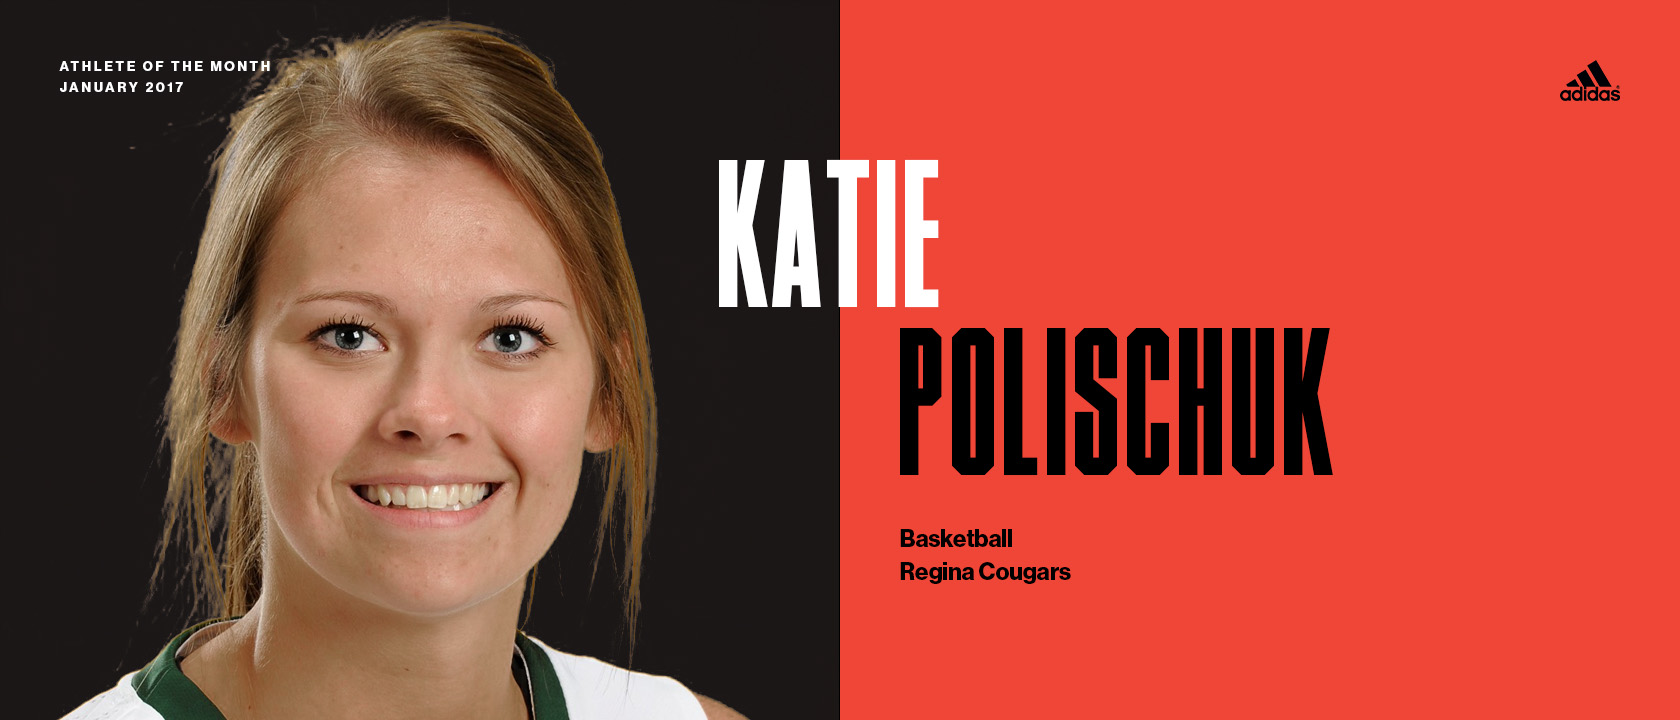 January: Katie Polischuk